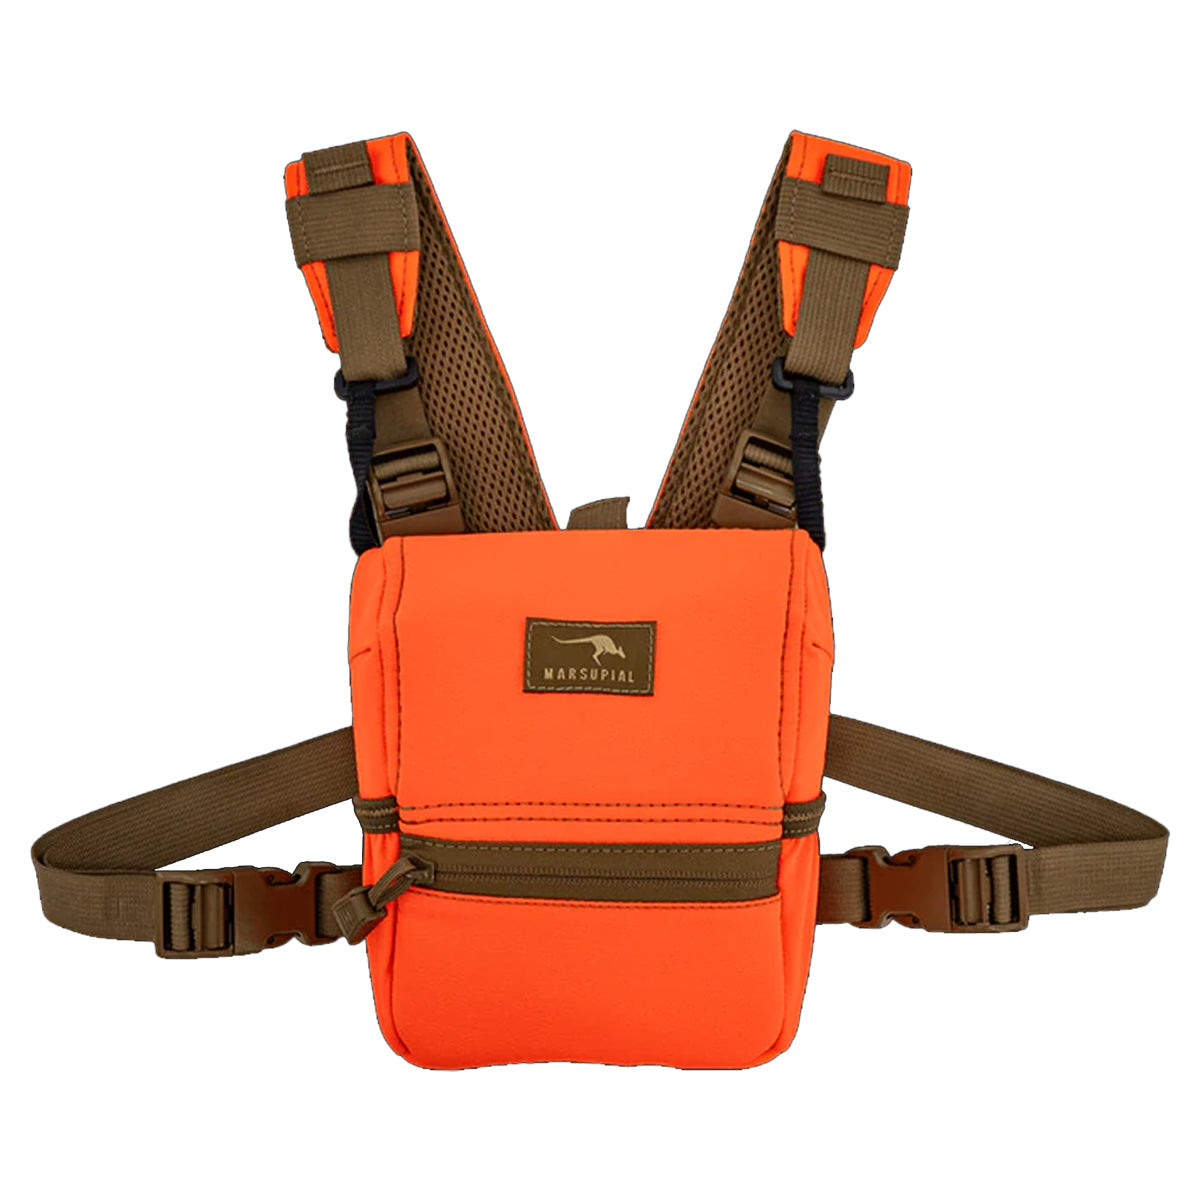 Marsupial Gear Enclosed Binocular Pack in Blaze Orange by GOHUNT | Marsupial Gear - GOHUNT Shop